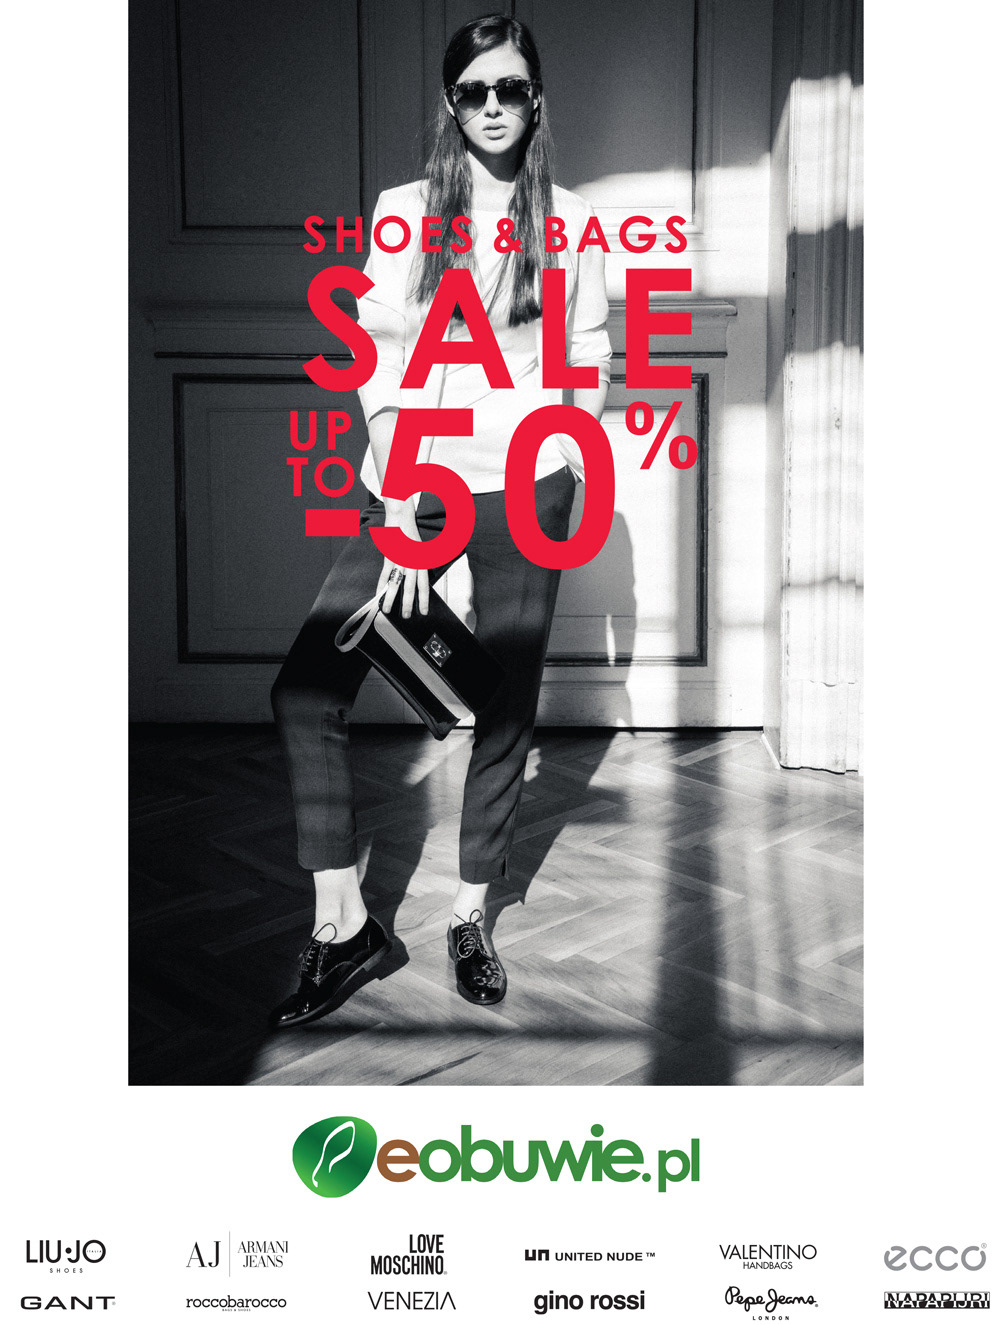 shoes bags buty edytorial reklama eobuwie photo moda